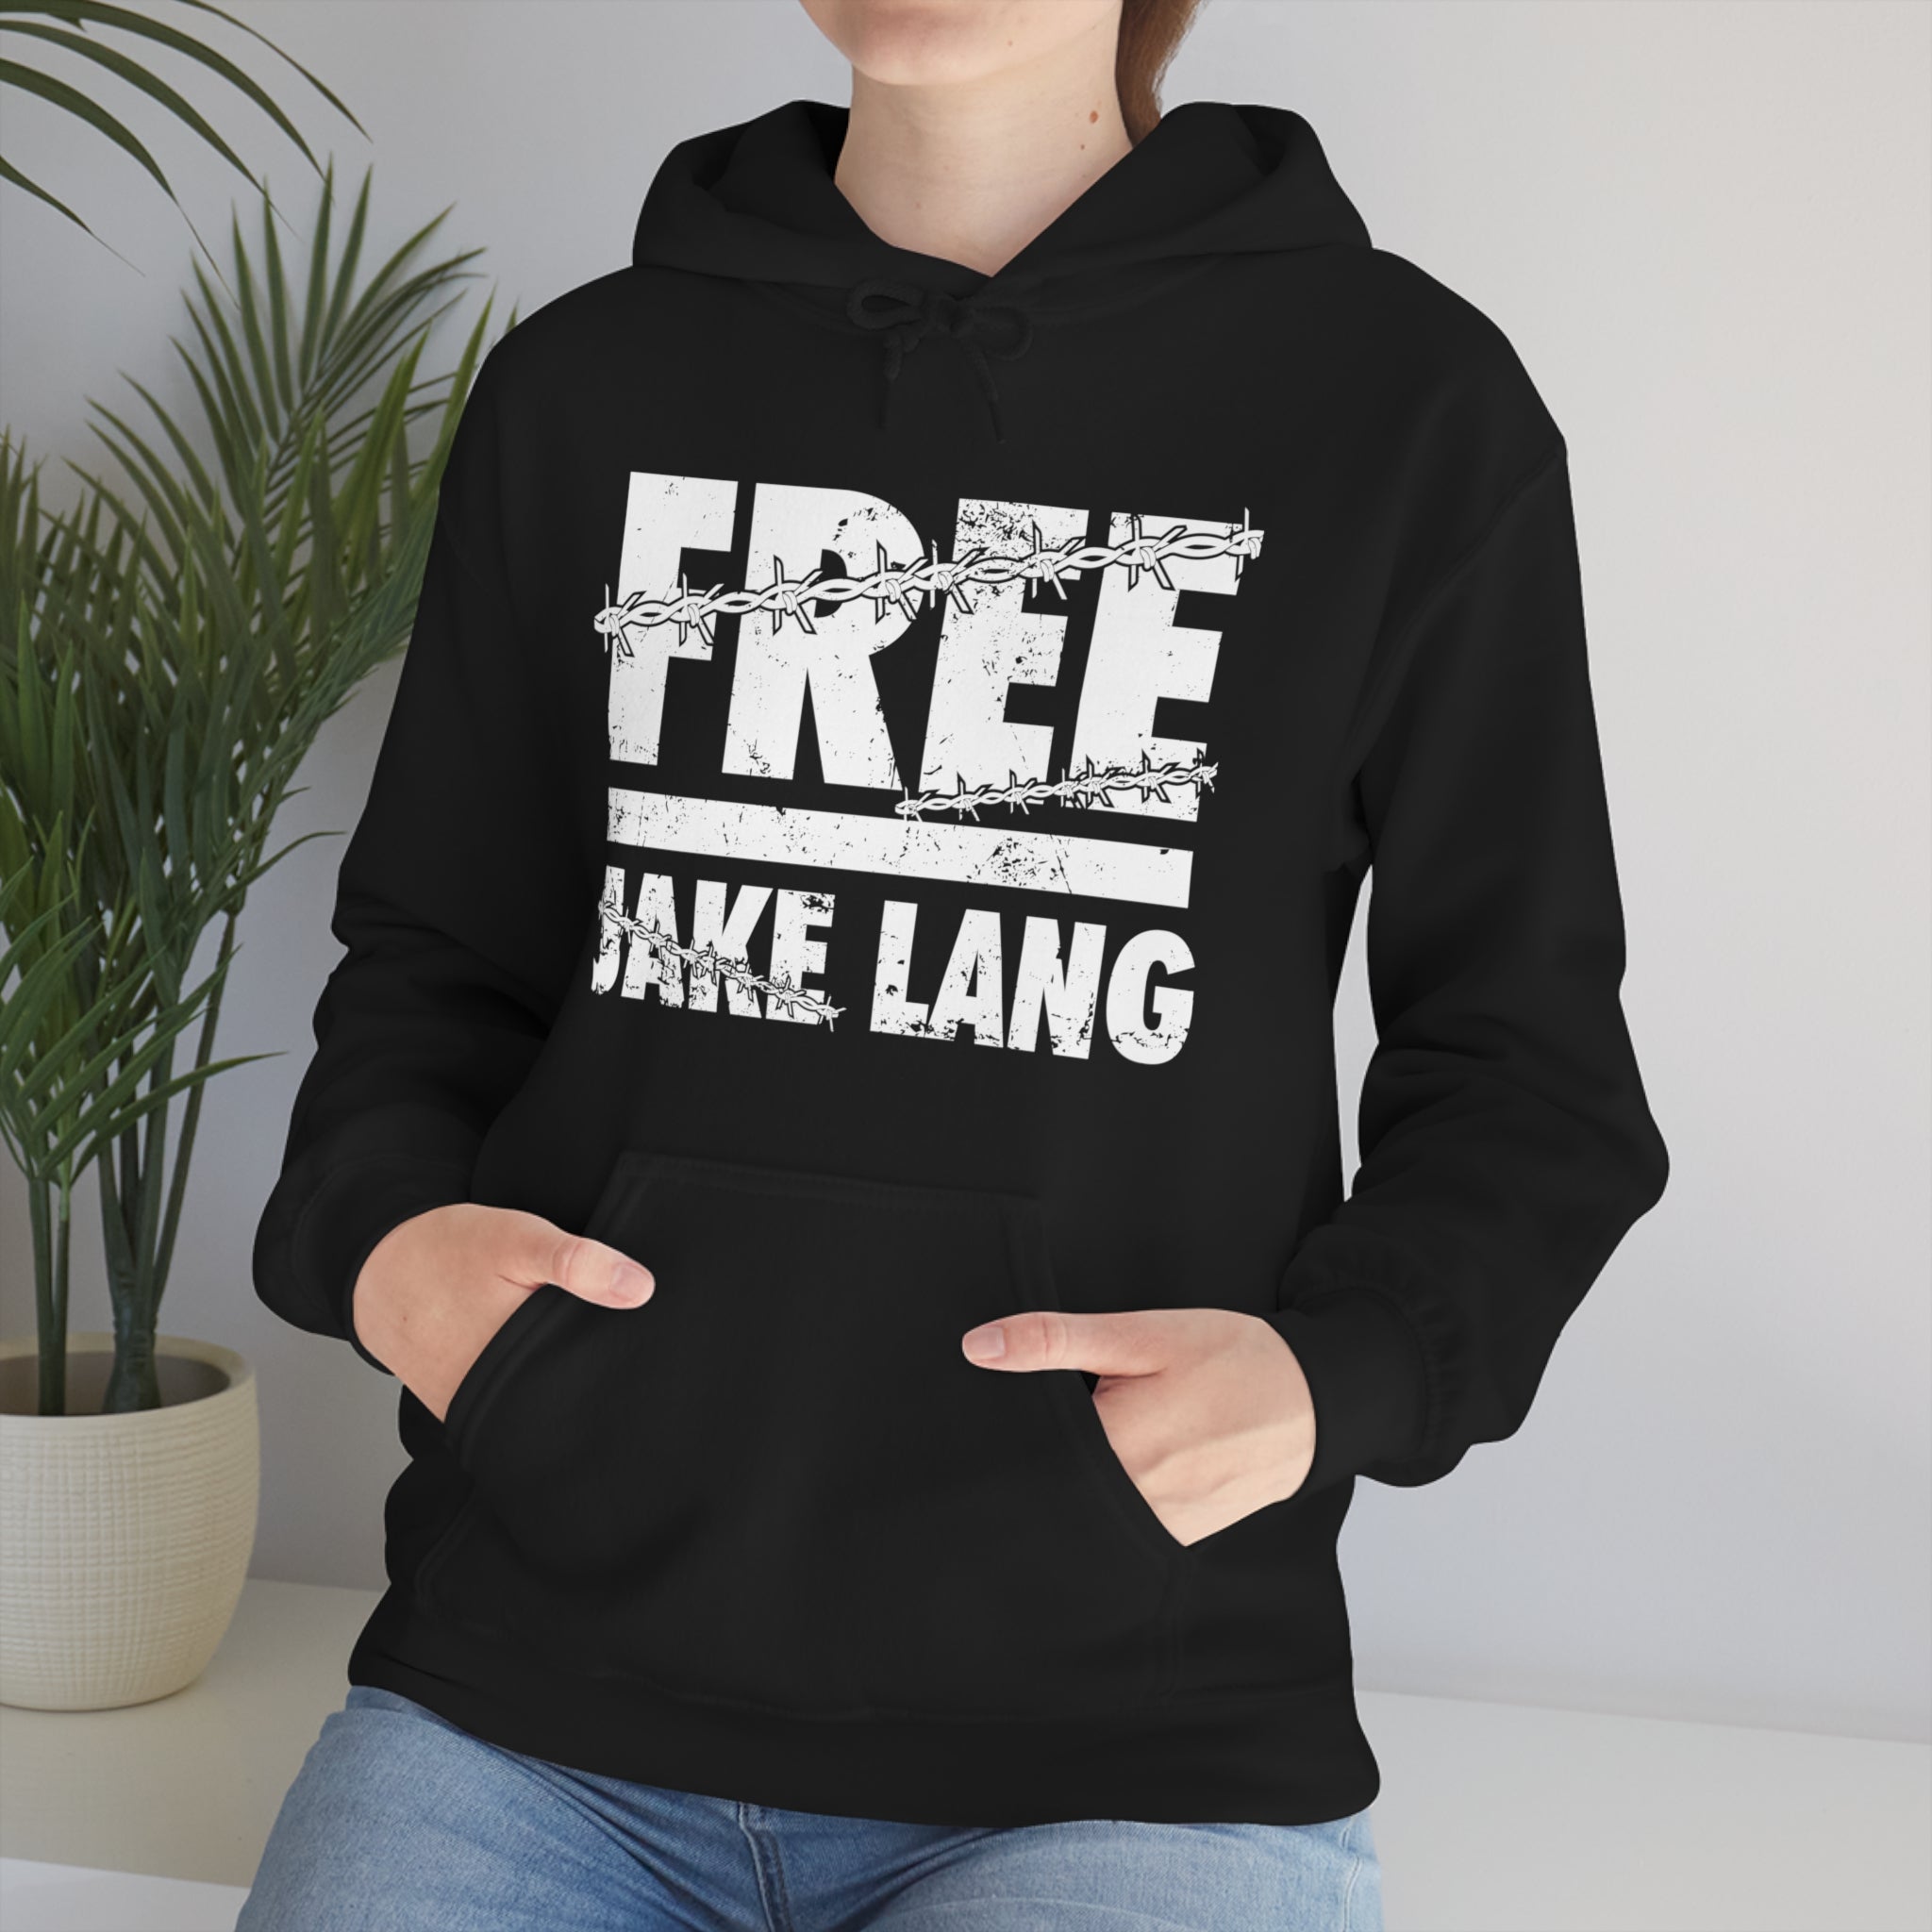 FREE JL BARBWIRE WHITE Hooded Sweatshirt